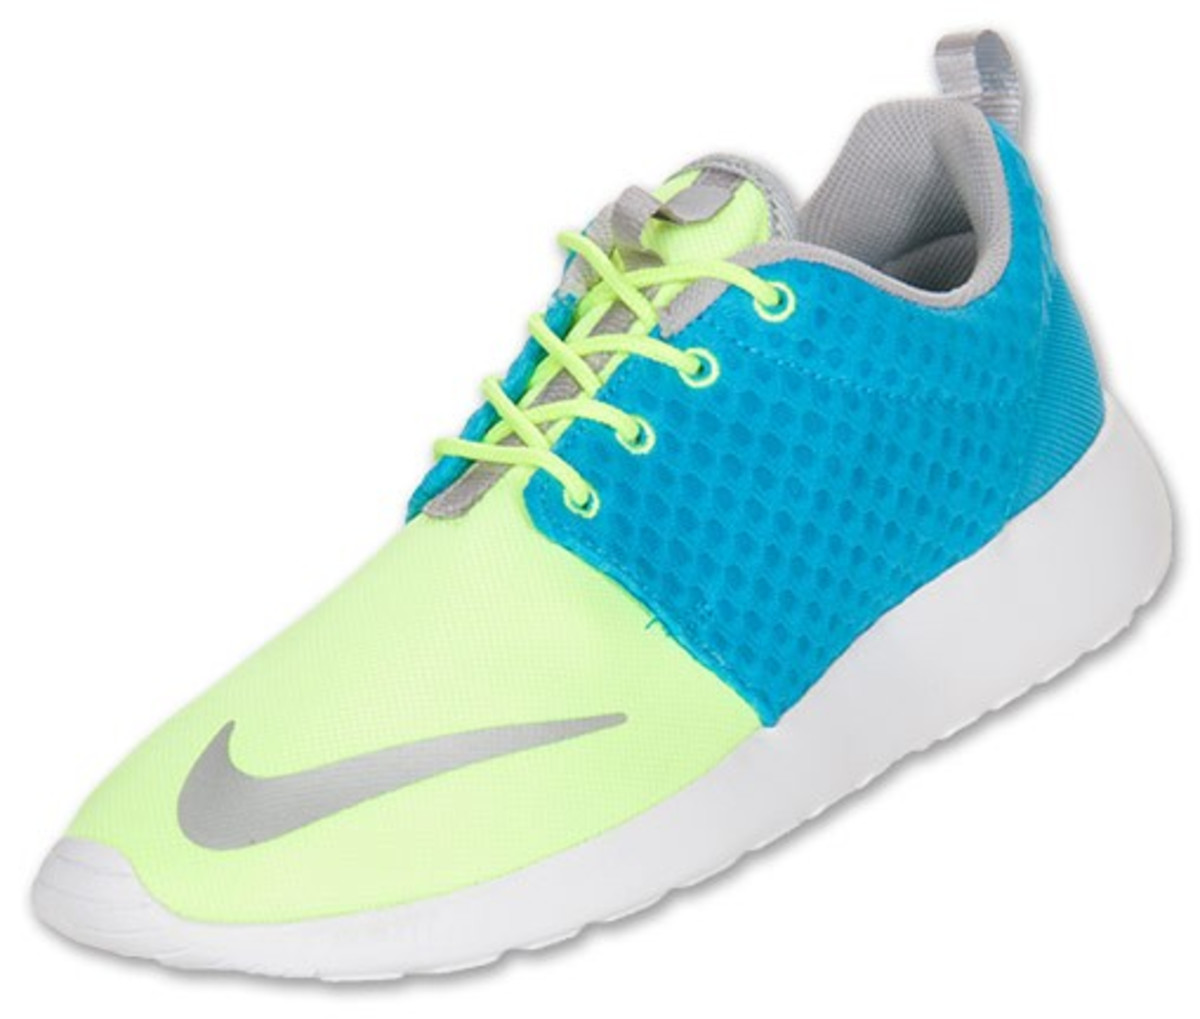 Nike Roshe Run FB “Current Blue/Hot Lime” | Complex